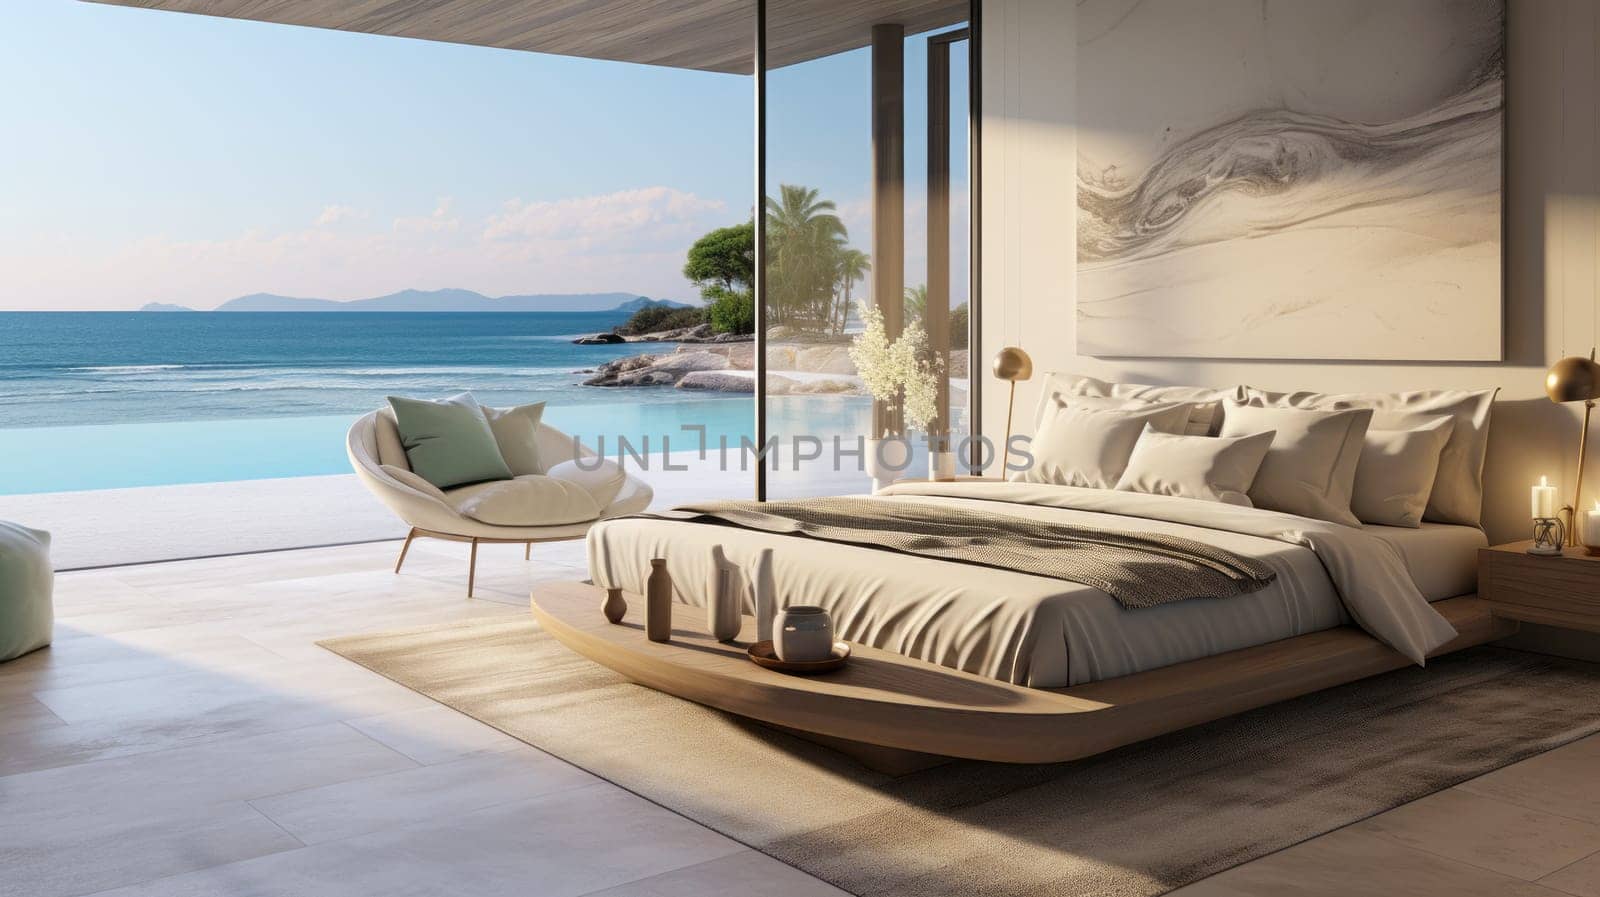 Luxury Hotel Modern interior bedroom with large windows. Summer scene ocean side. by NataliPopova